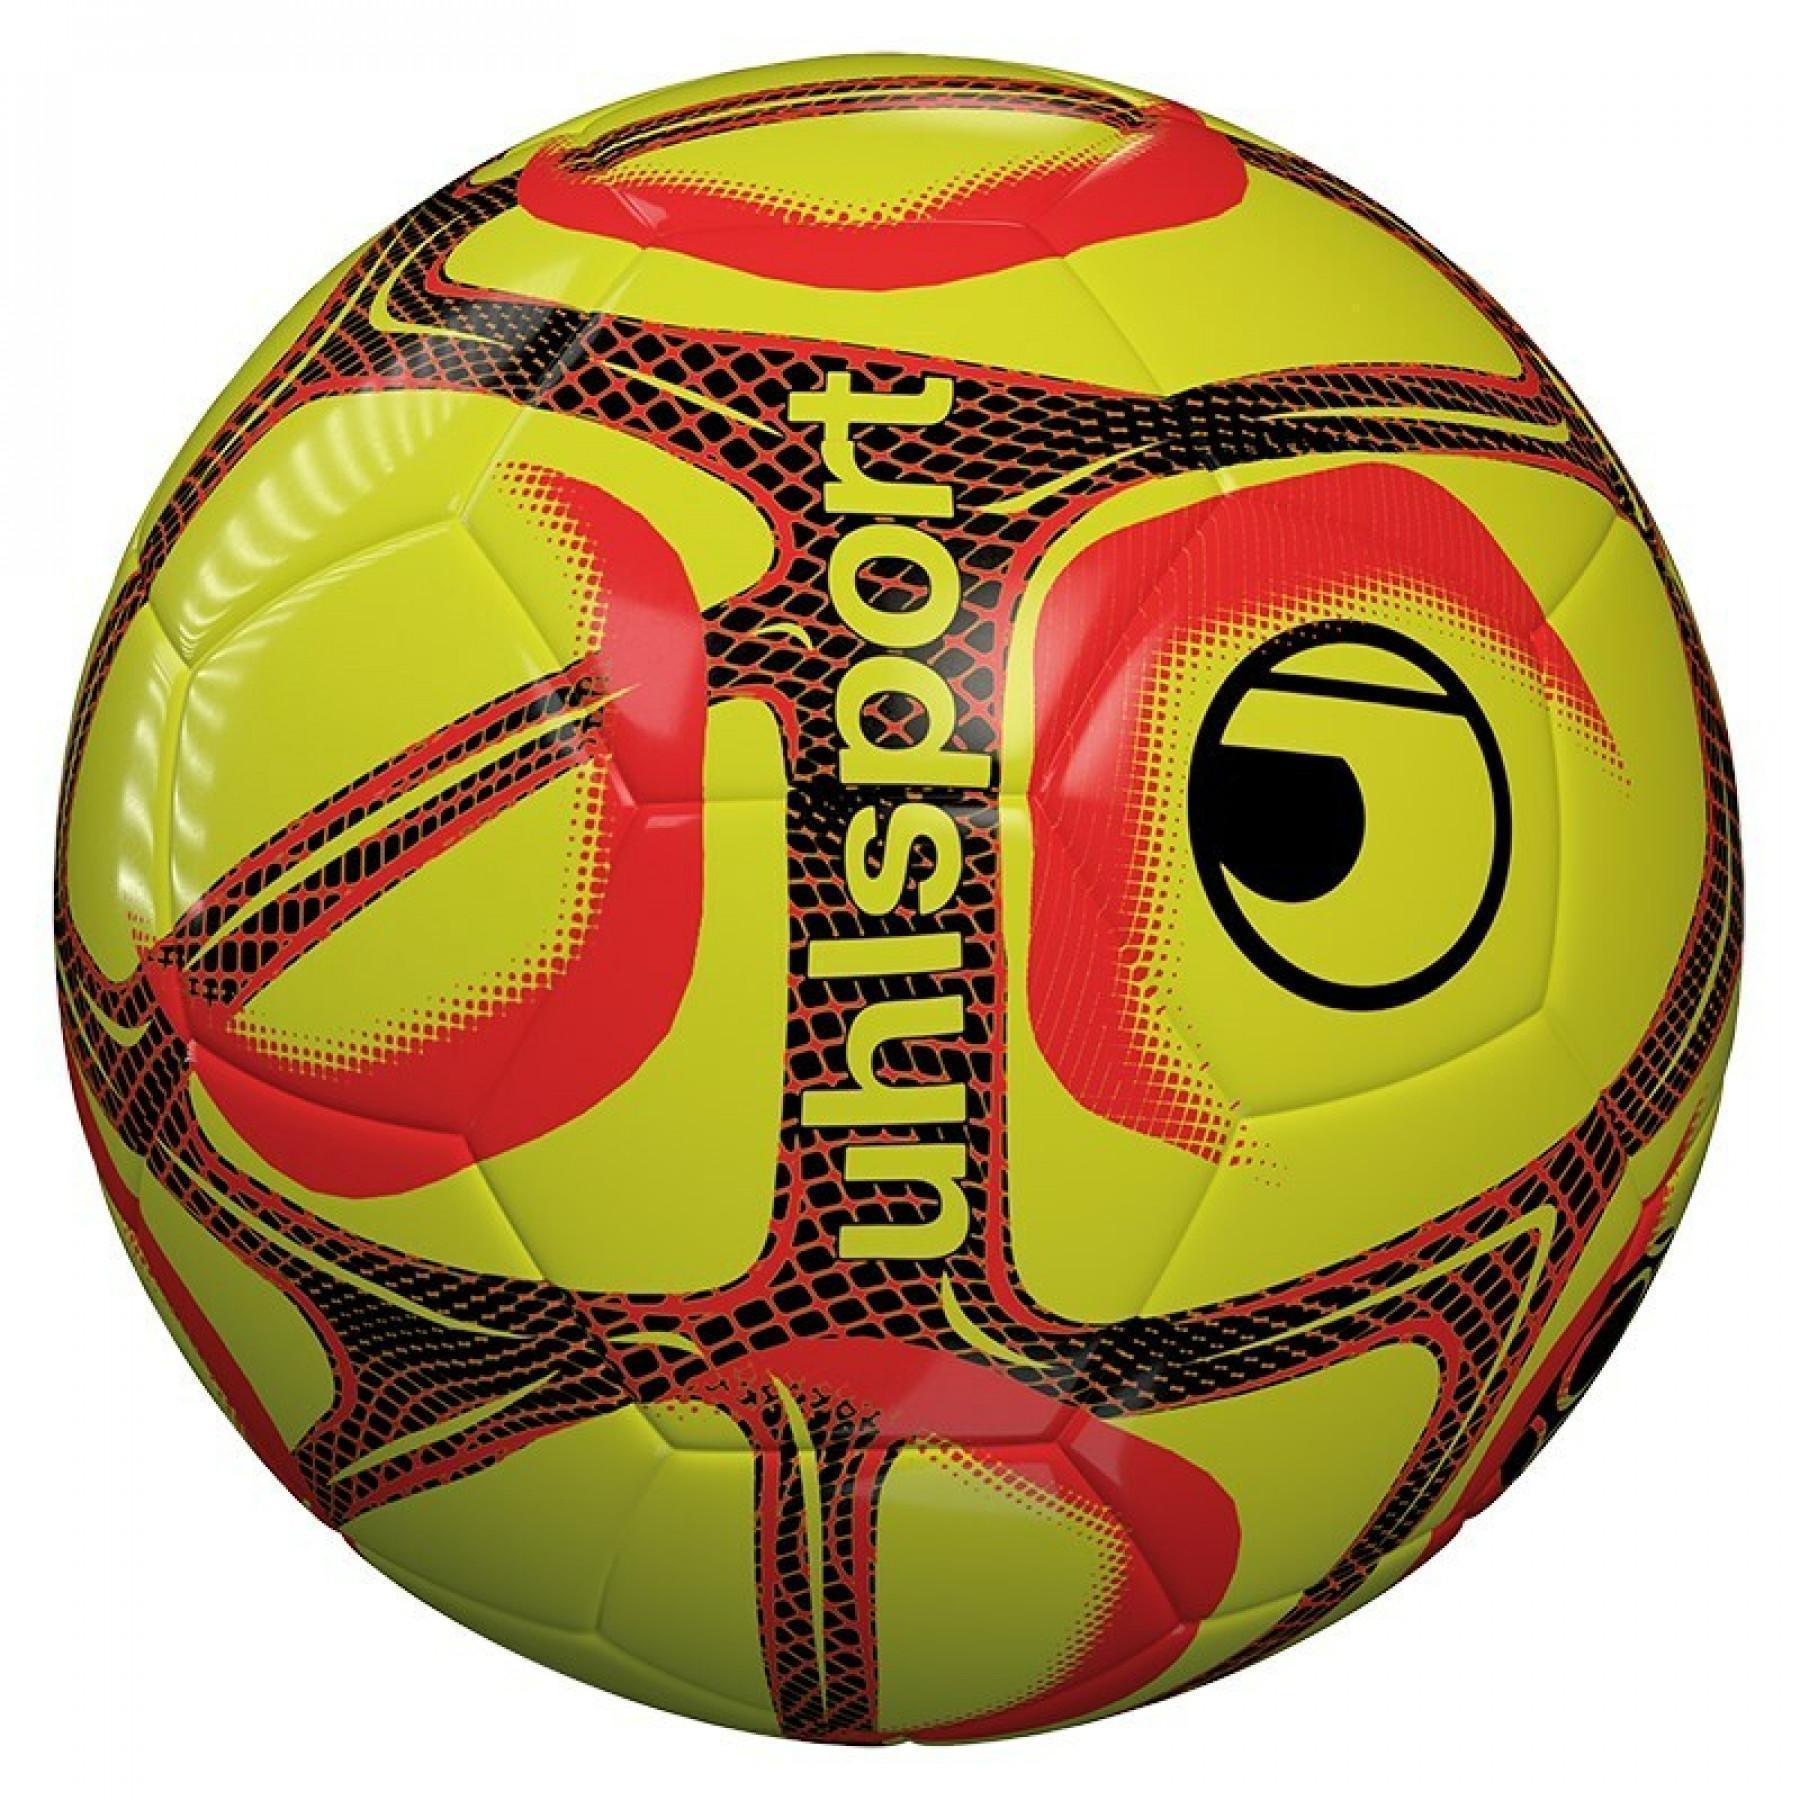 Ballon Uhlsport Triompheo club training